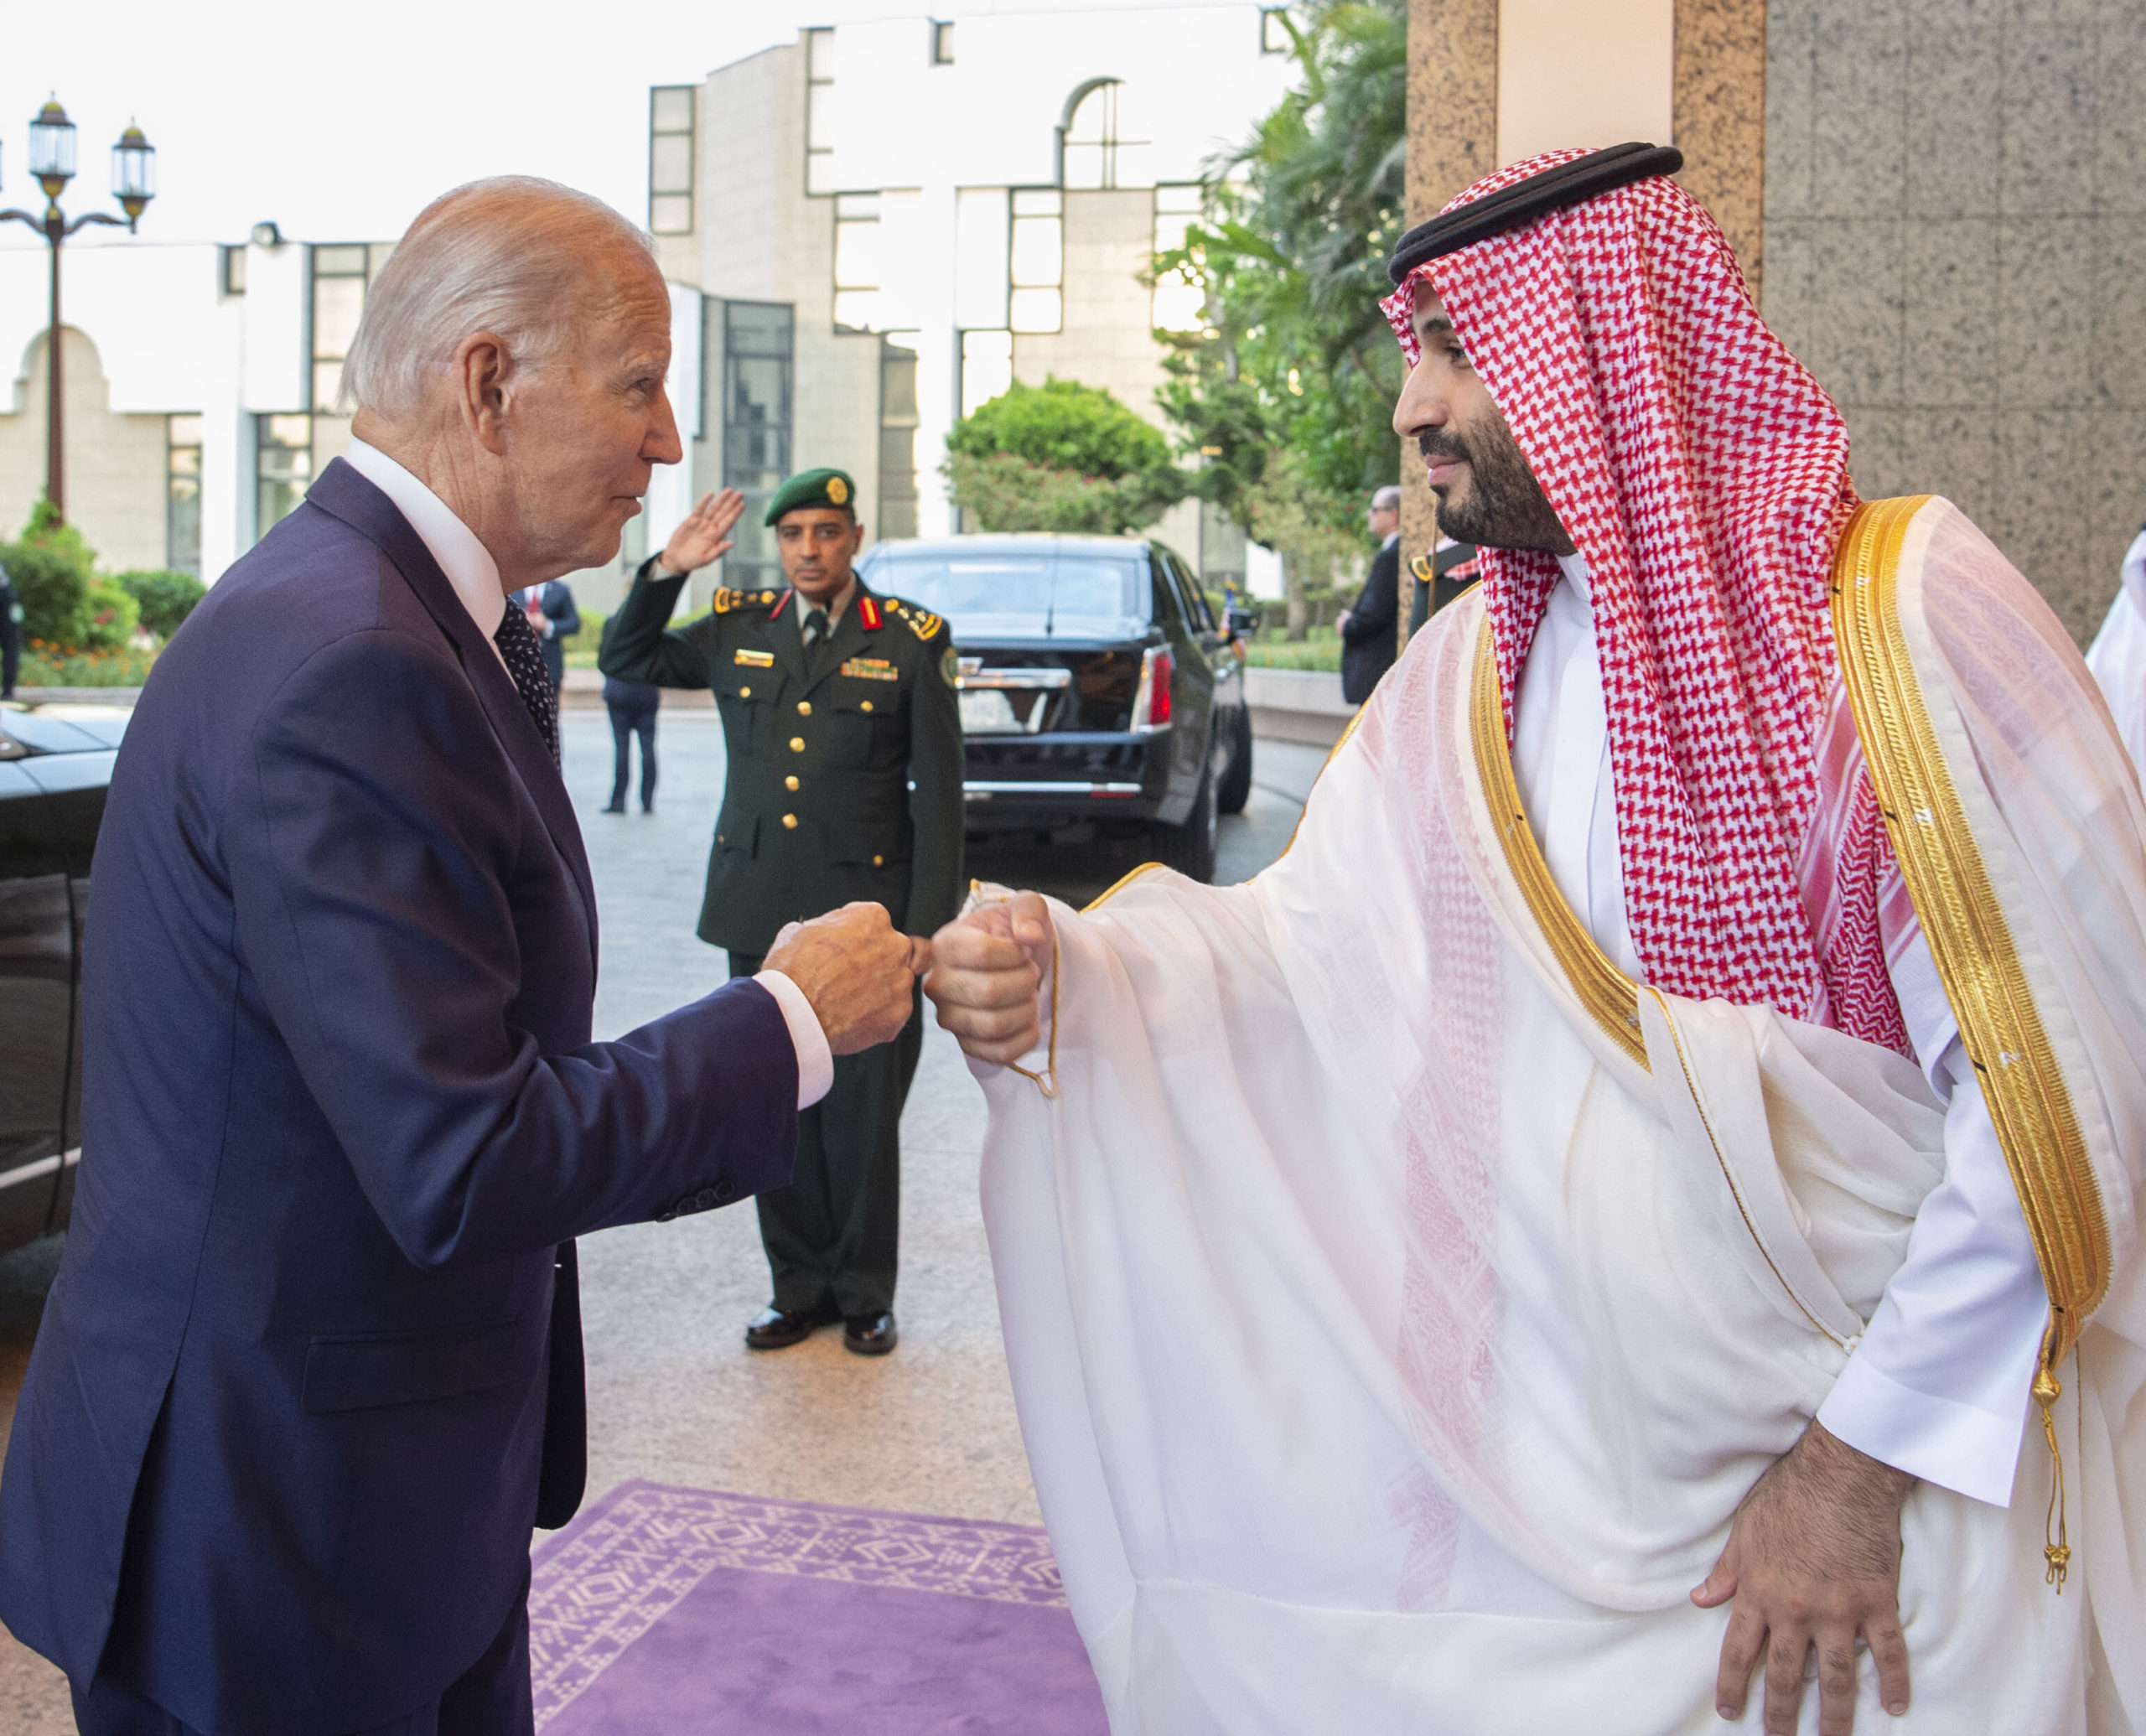 Joe Biden Grovels to the Saudis